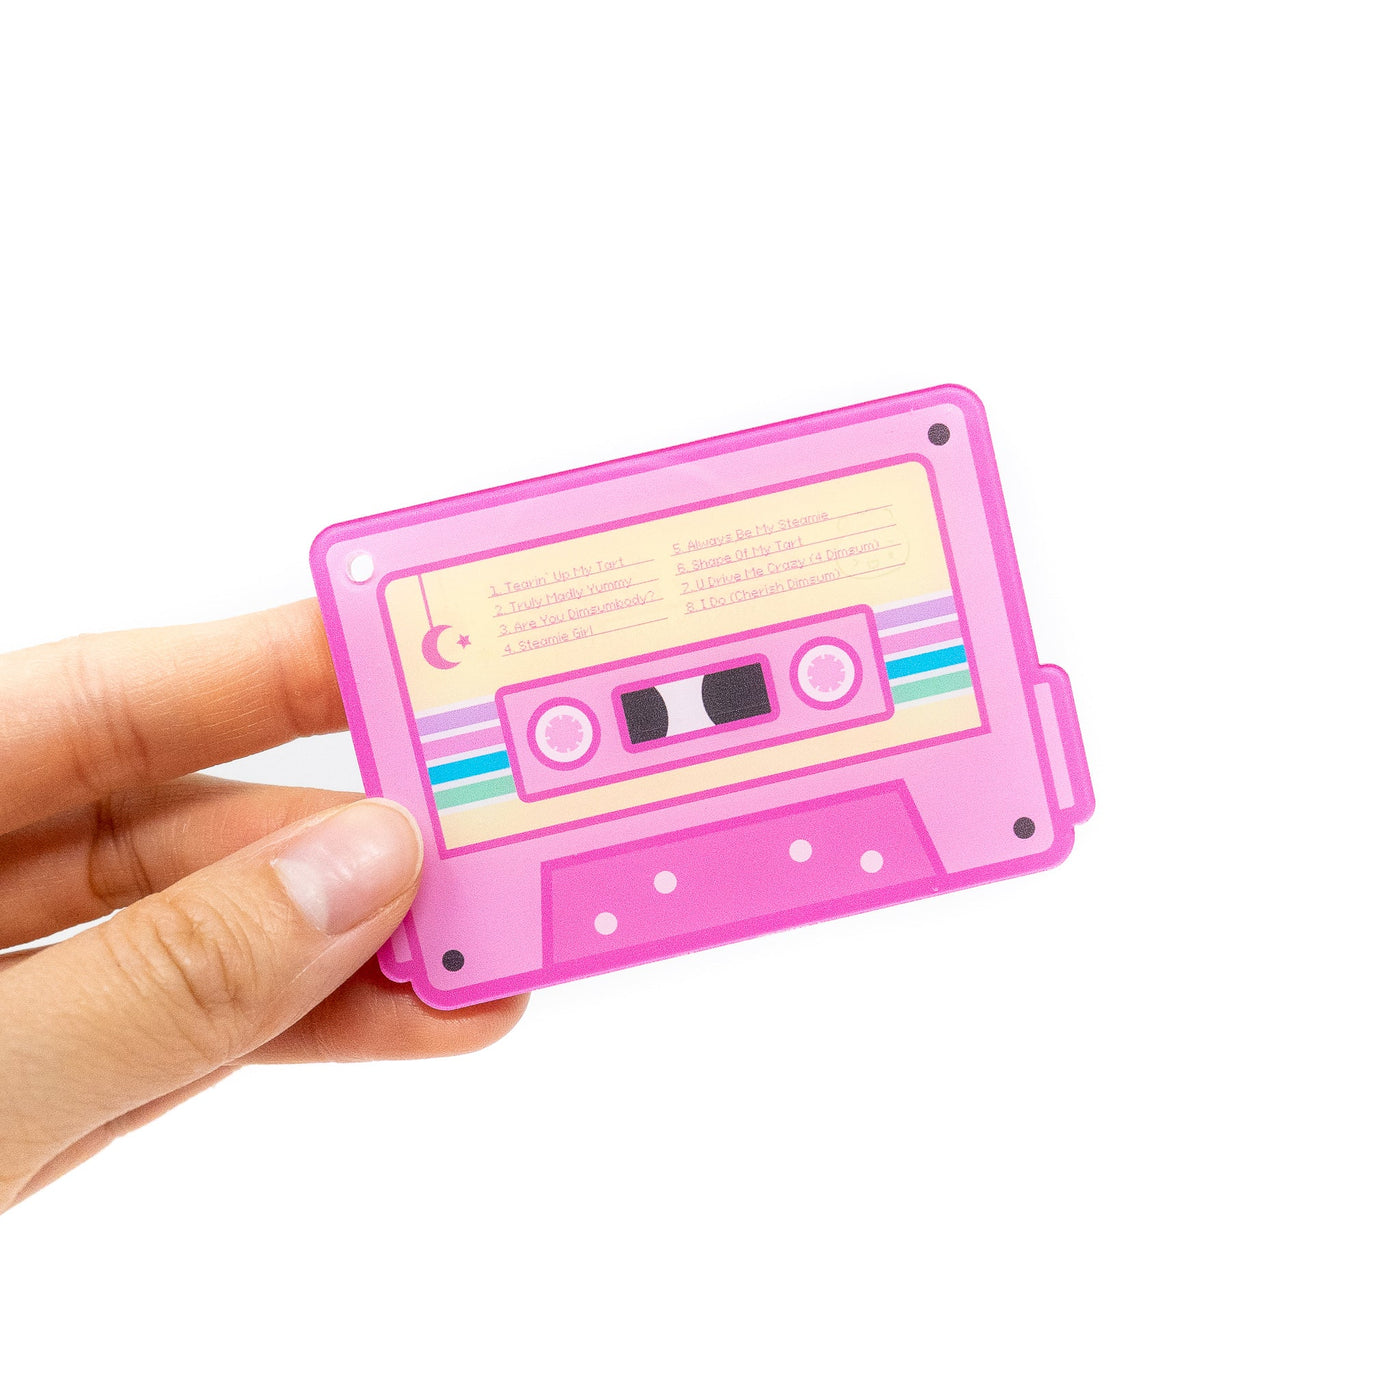 MISC080 | Free 90's Baby Mixtape V2.0 Washi Cutter